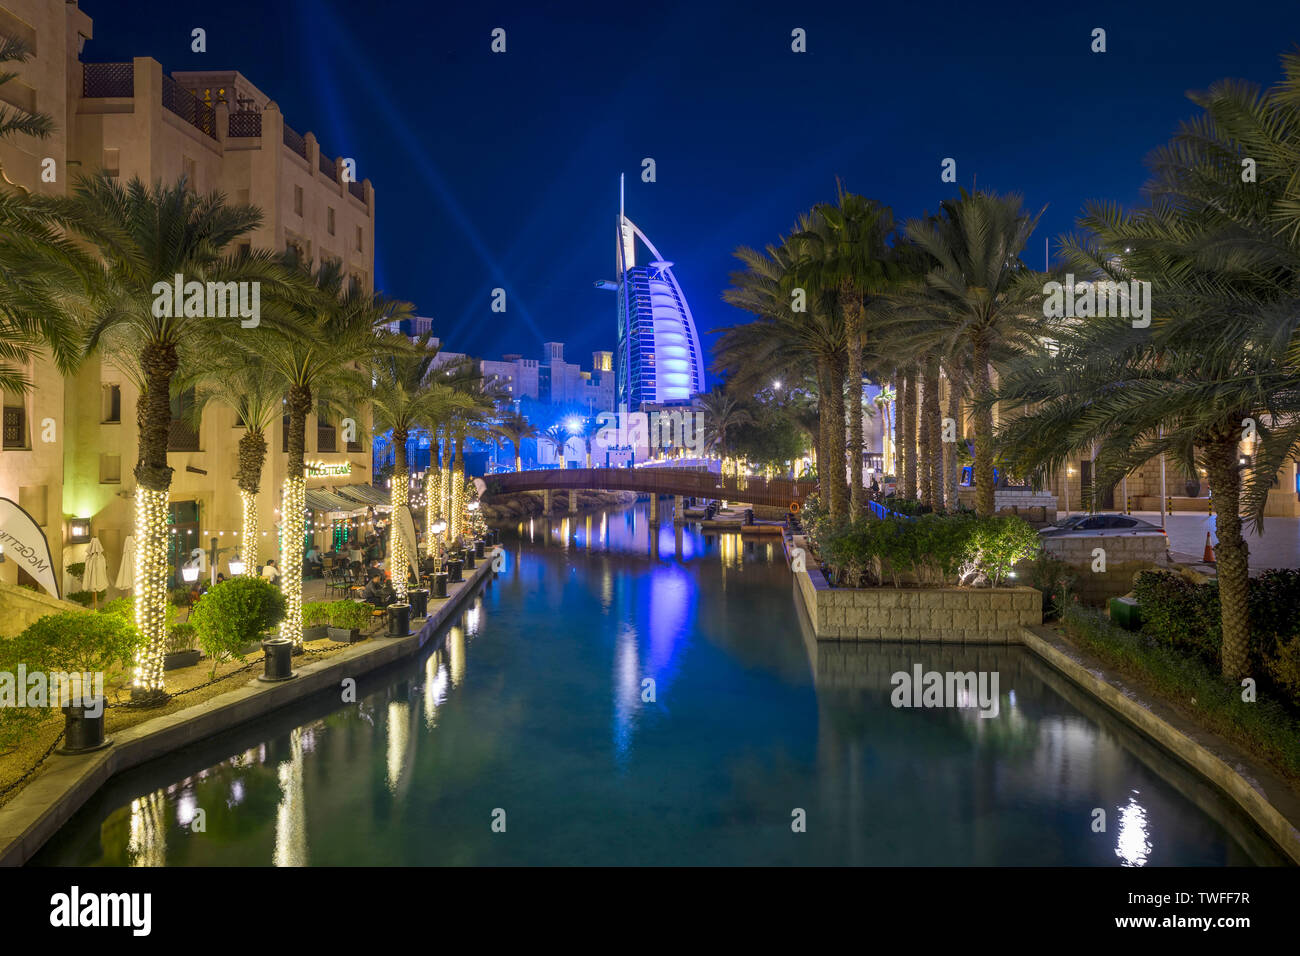 The Burj al Arab is illuminated in beams of light in Souk Madinat Jumeirah. Stock Photo